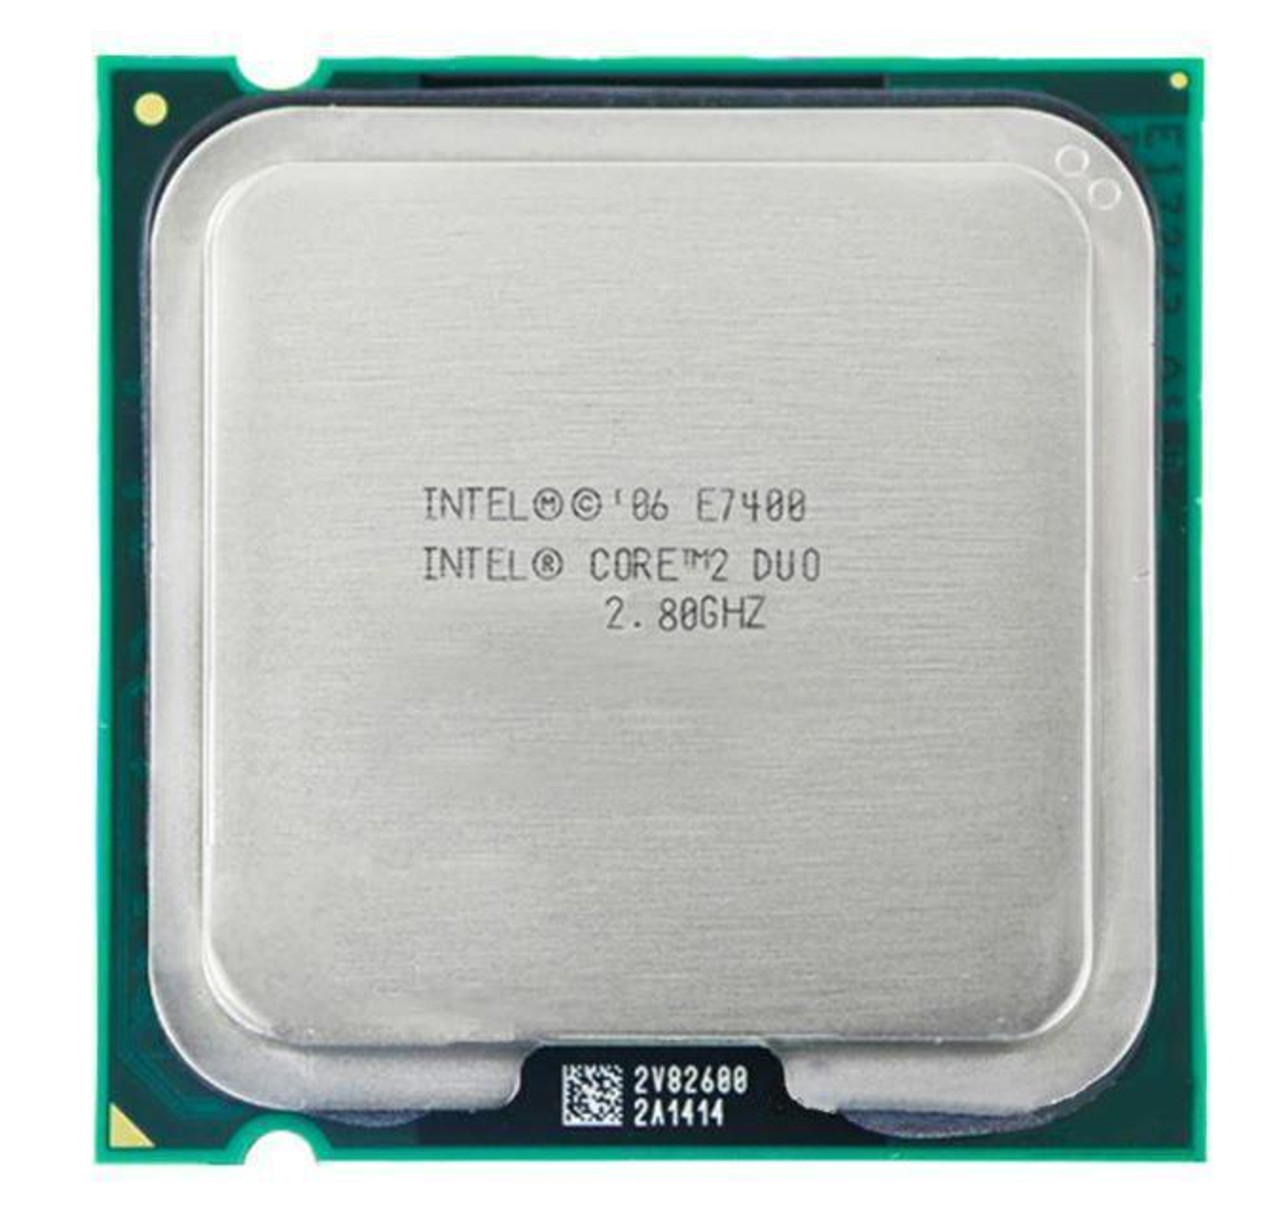 Dell 2.80GHz 1066MHz FSB 3MB L2 Cache Socket LGA775 Intel Core 2 Duo E7400 Desktop Processor Upgrade